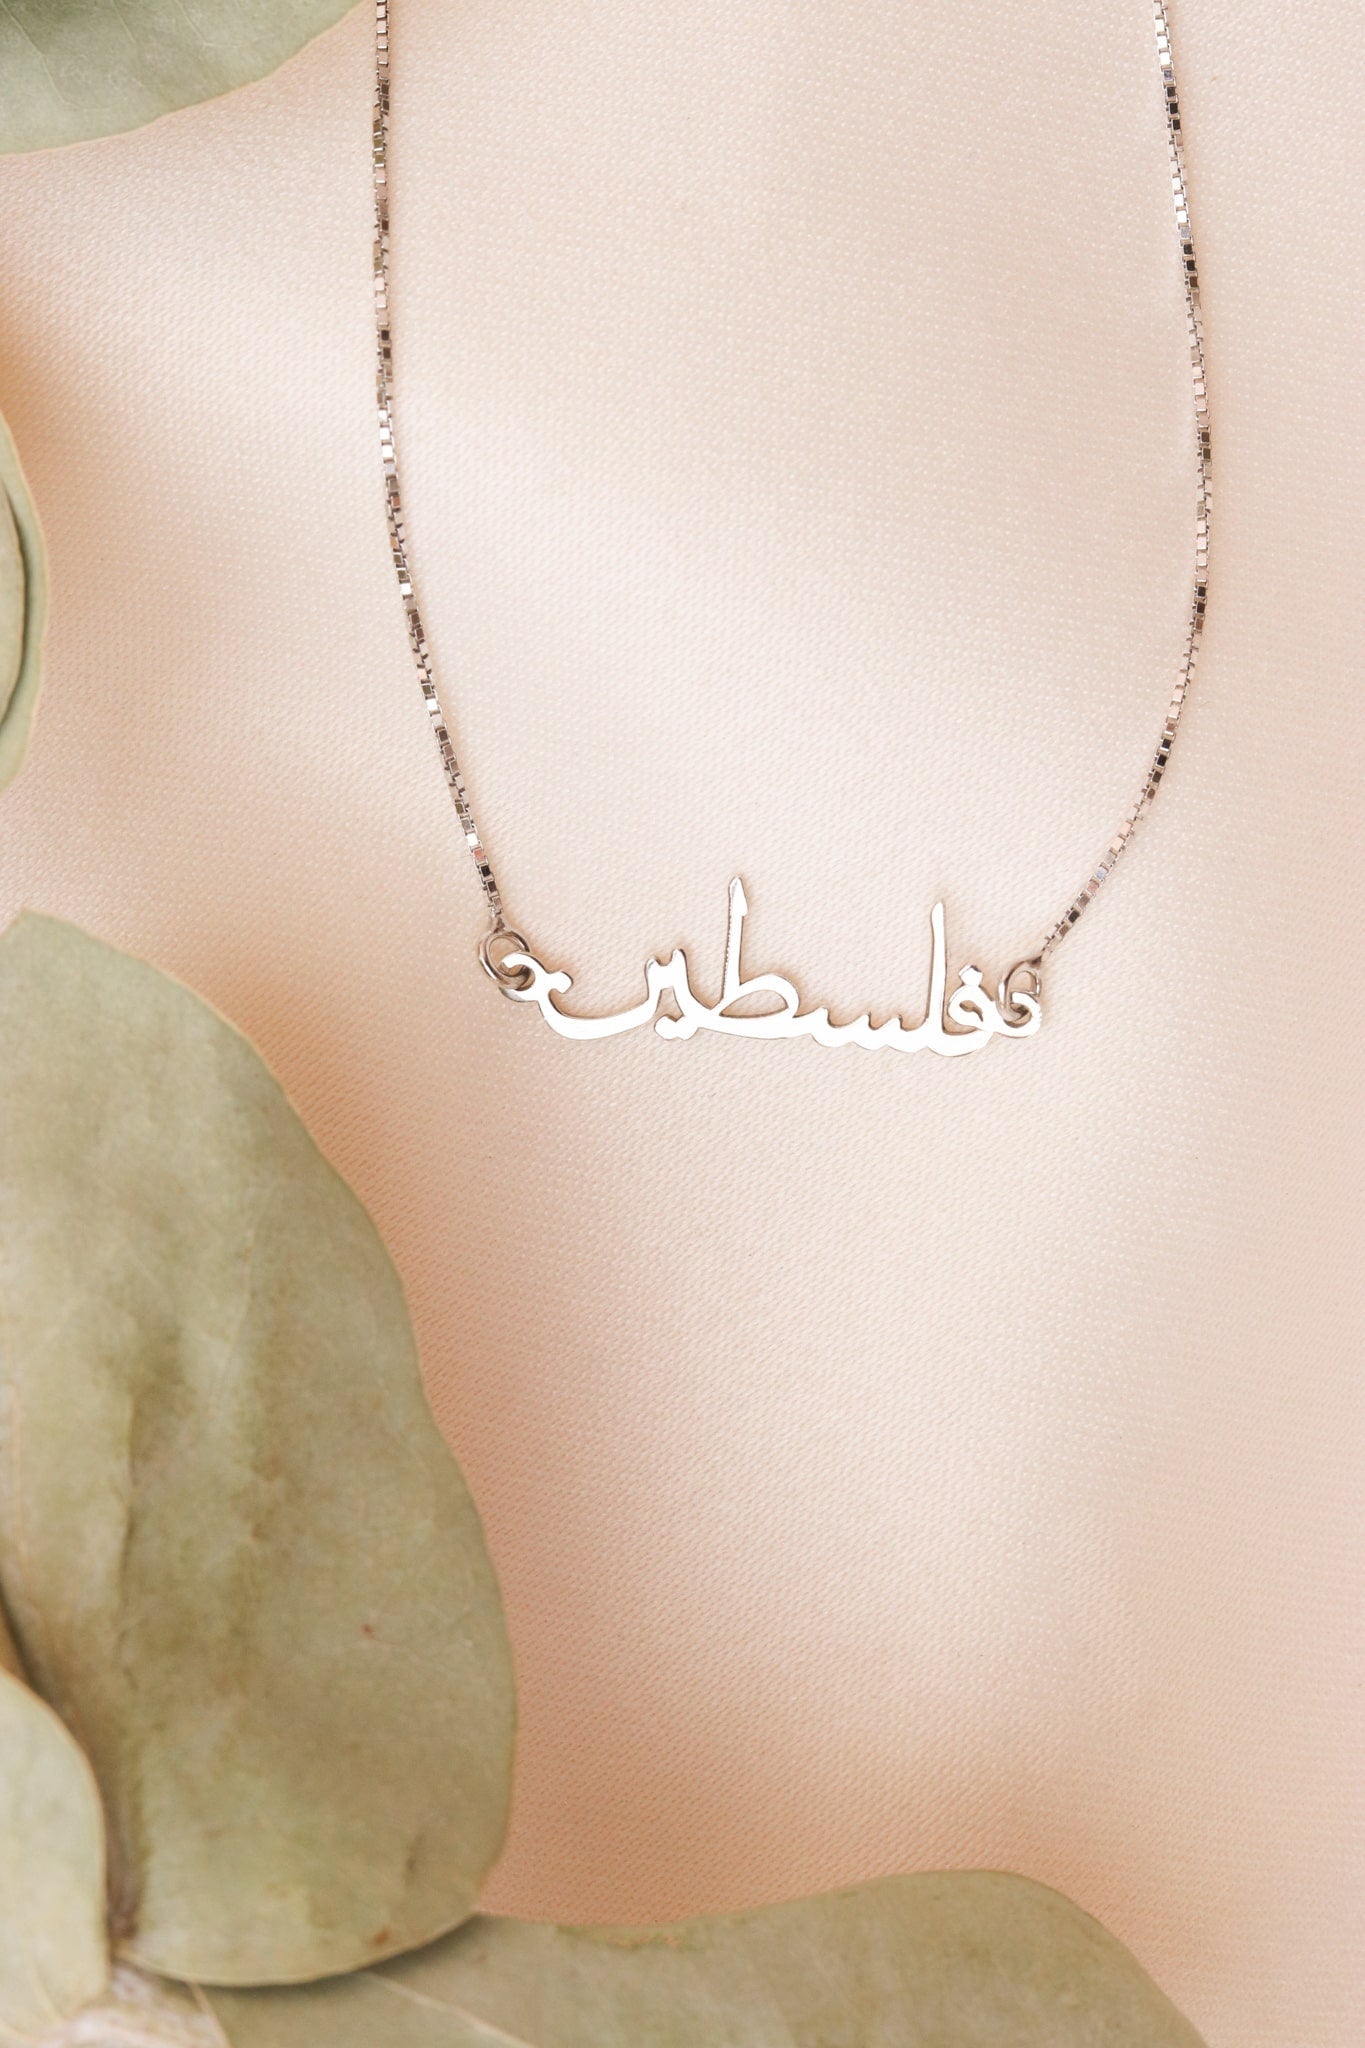 Palestine Arabic word necklace